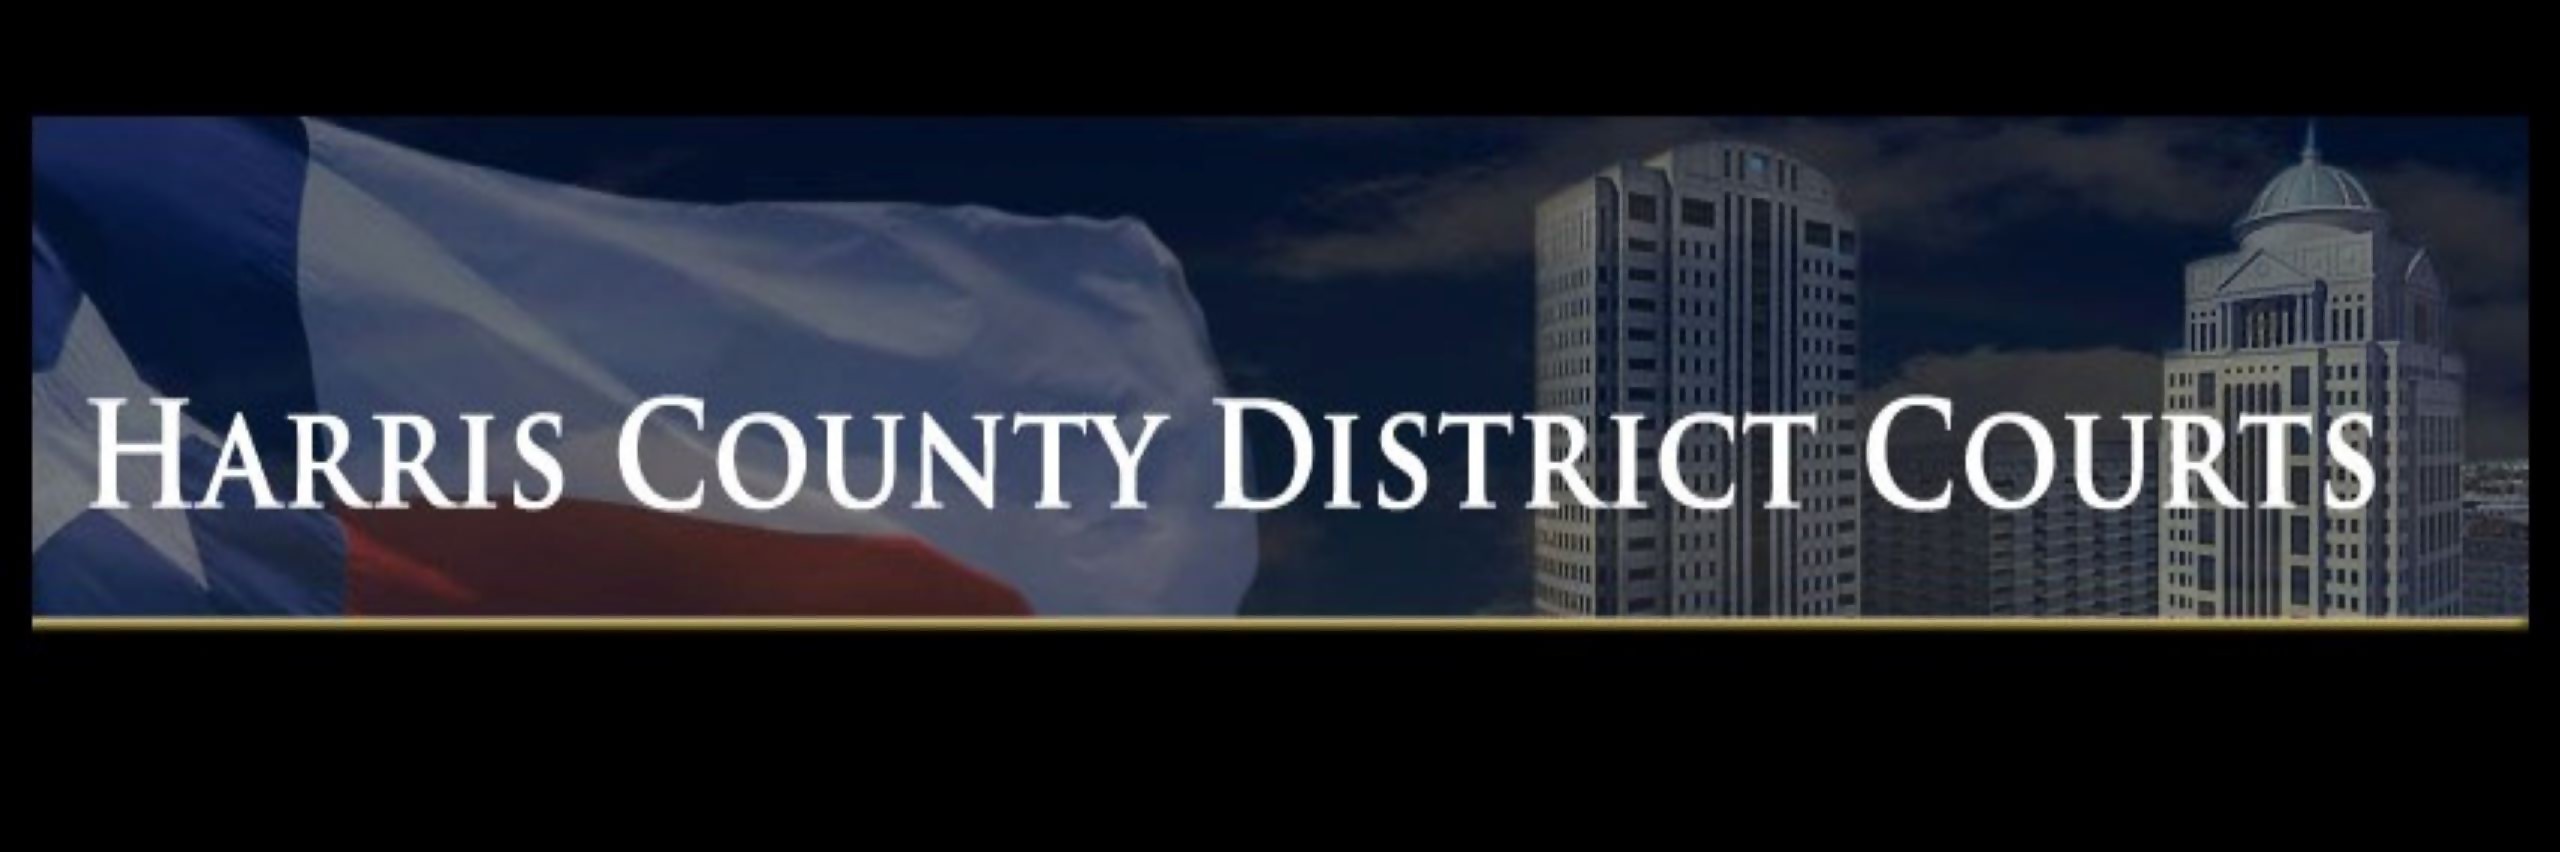 232nd District Court - Live Stream